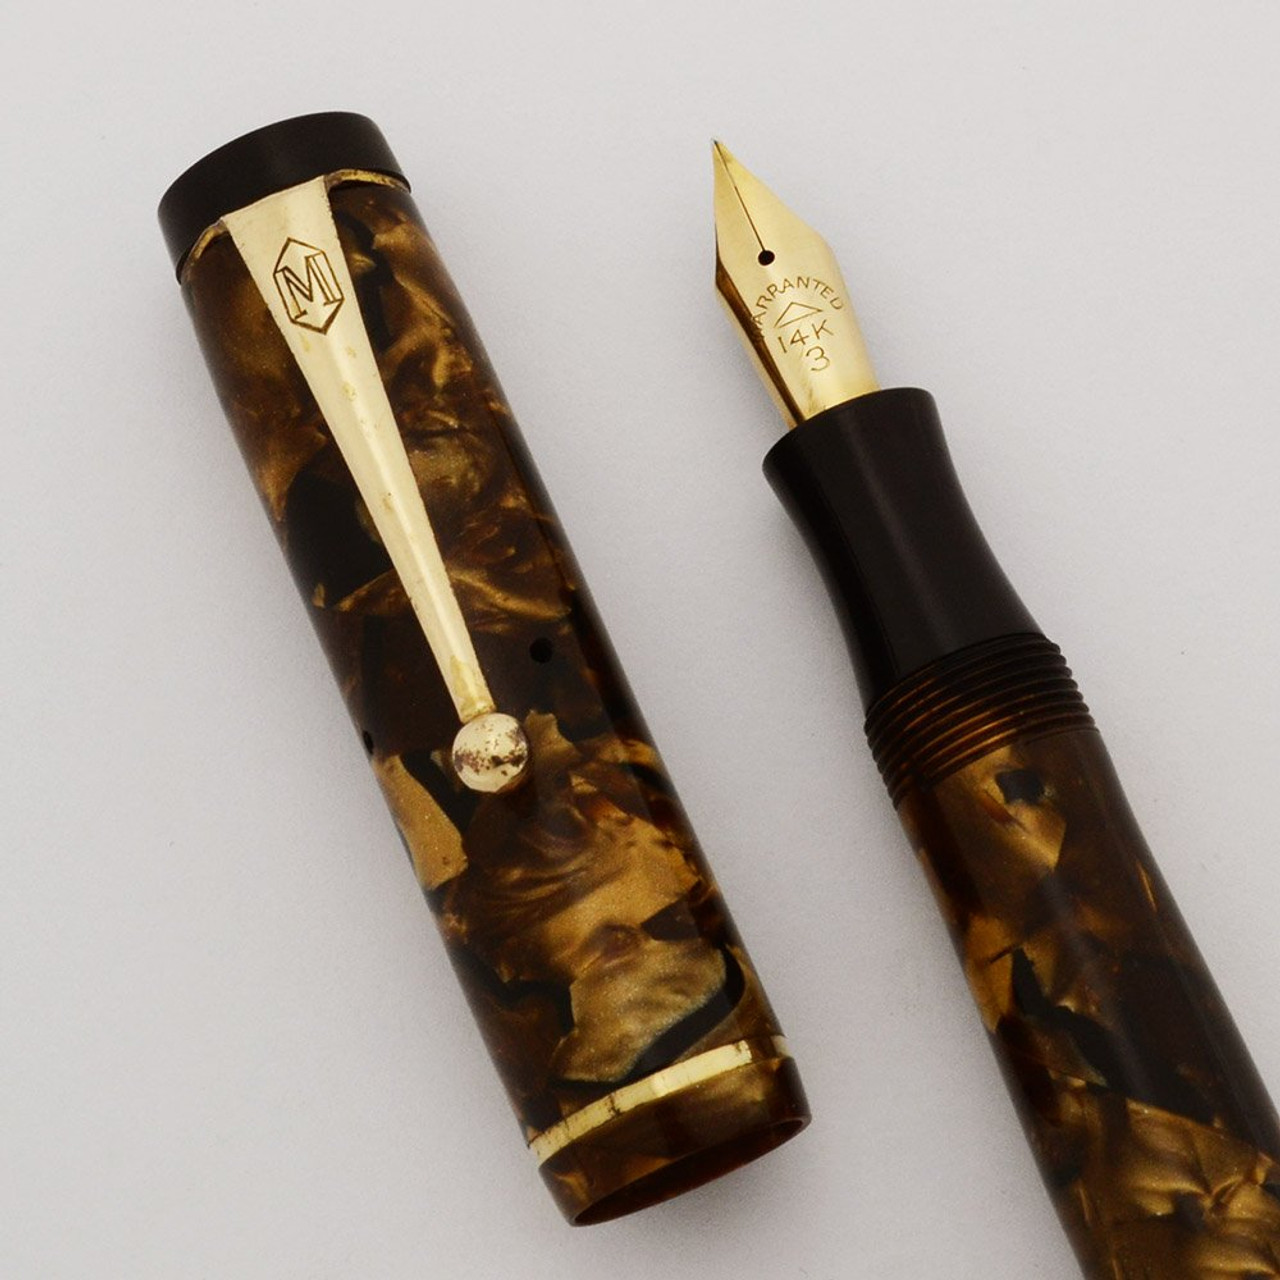 Mentmore Autoflow Fountain Pen (1940s) - Marbled Golden Brown, 14k Flexible Nib (Excellent, Restored)